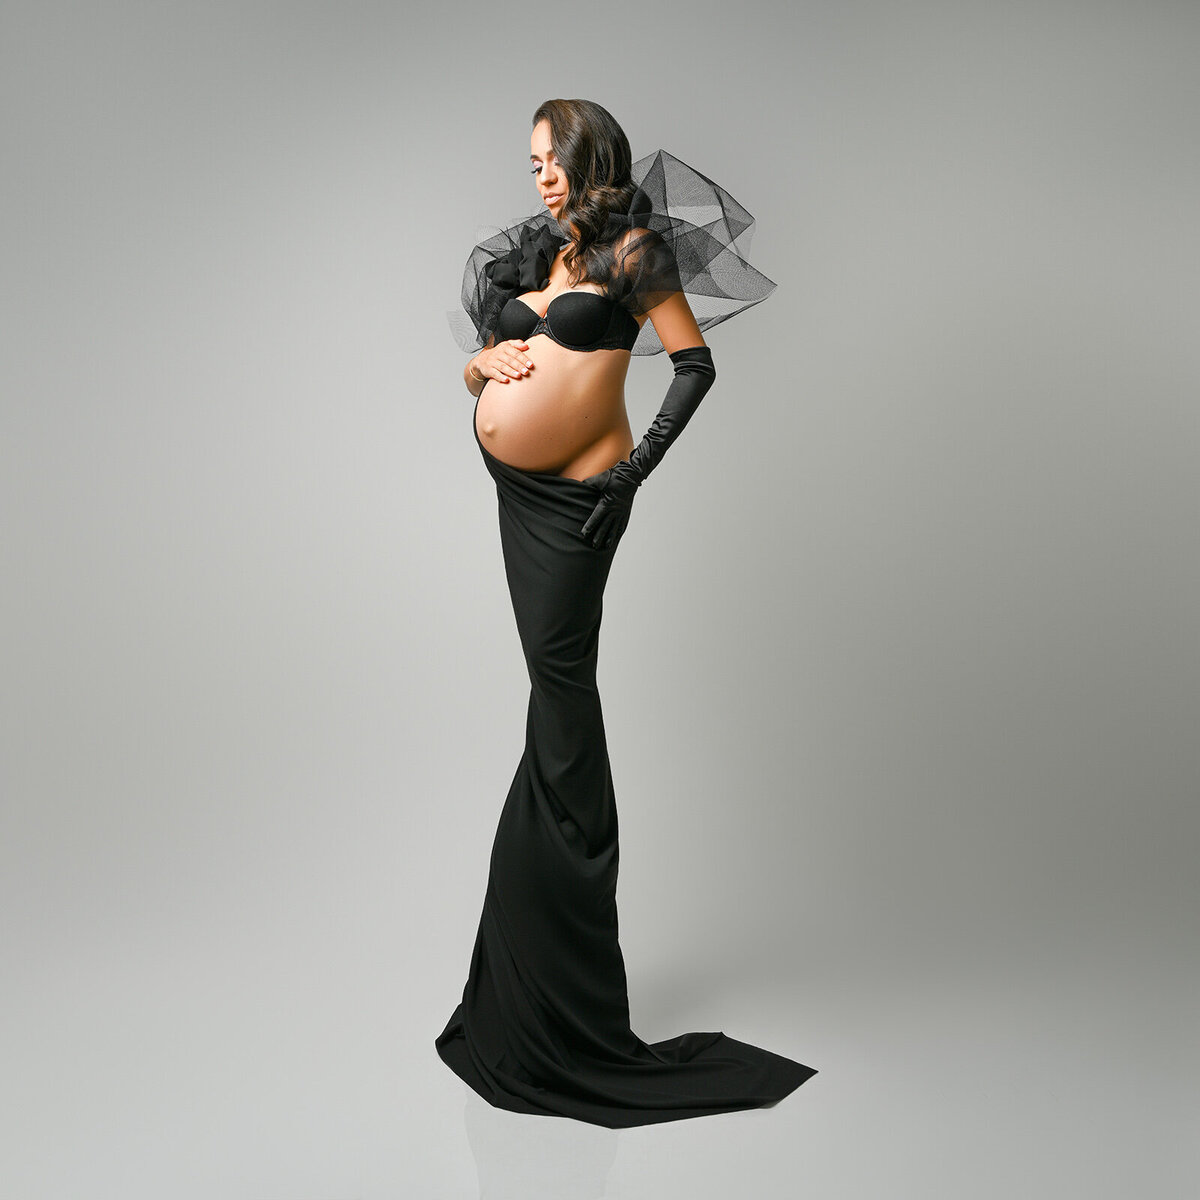 11 - lisset galeyev maternity photographer